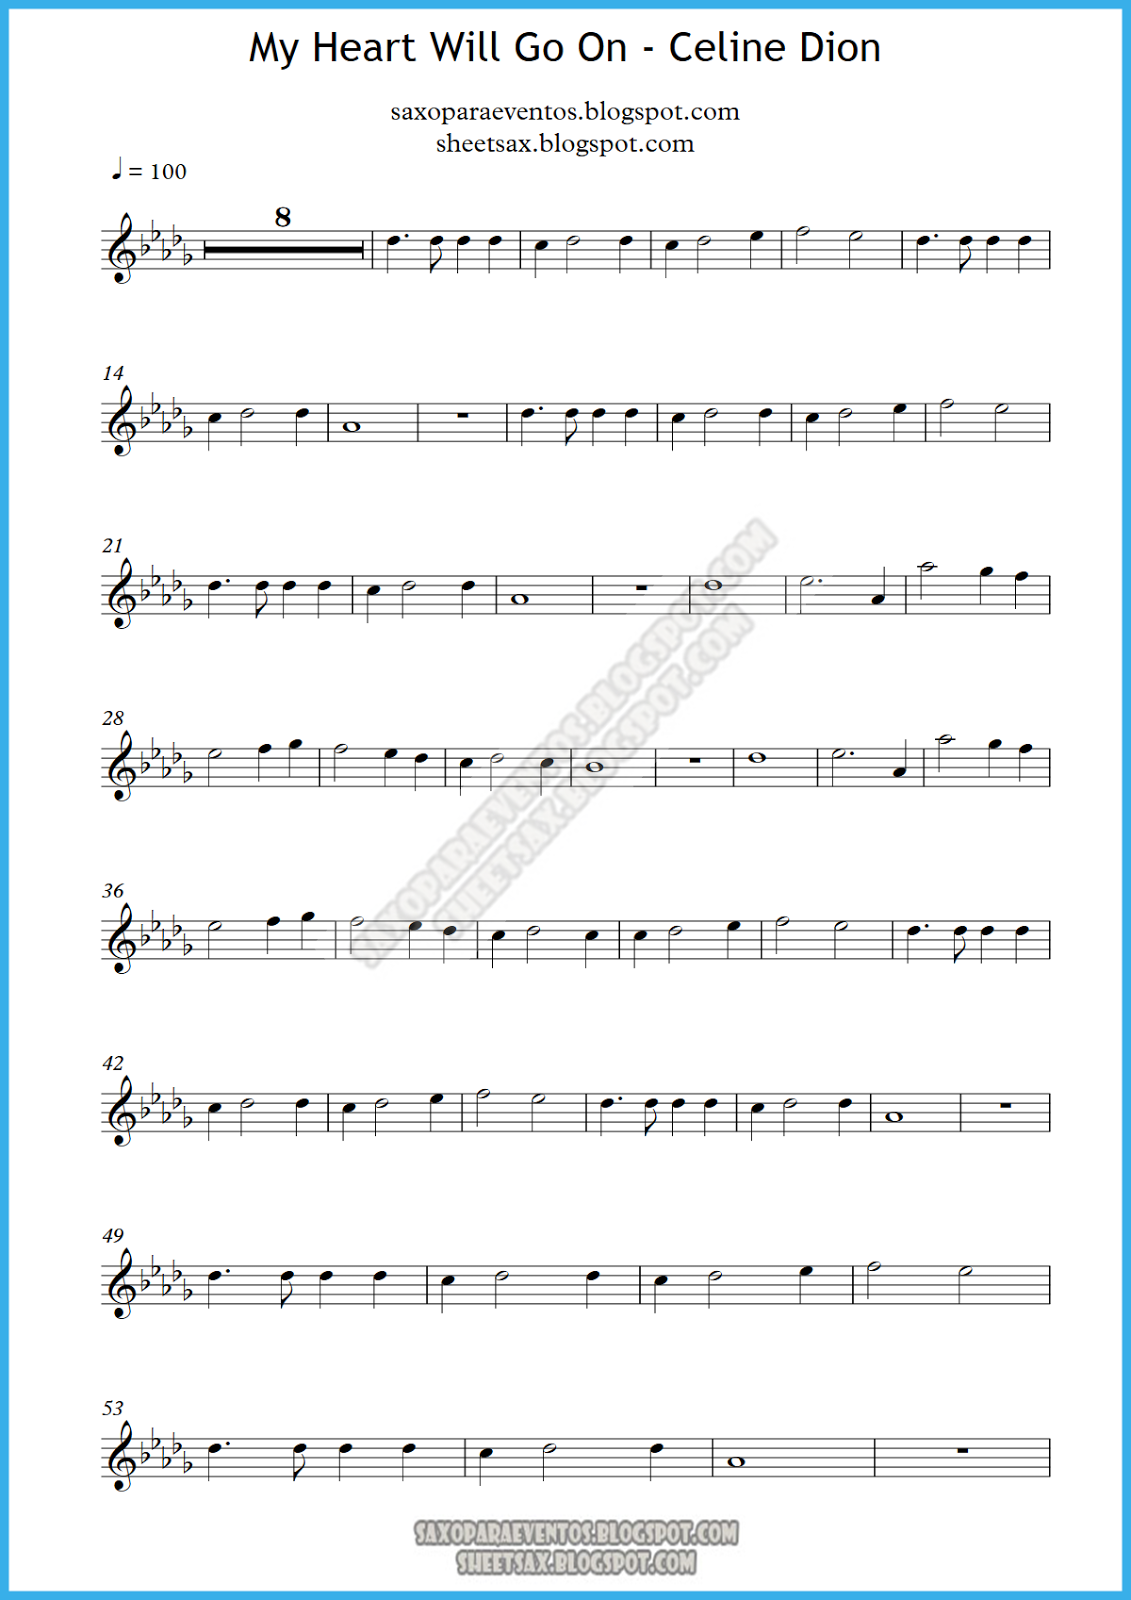 titanic-my-heart-will-go-on-music-score-sheet-music-and-backing-track-playalong-free-sheet